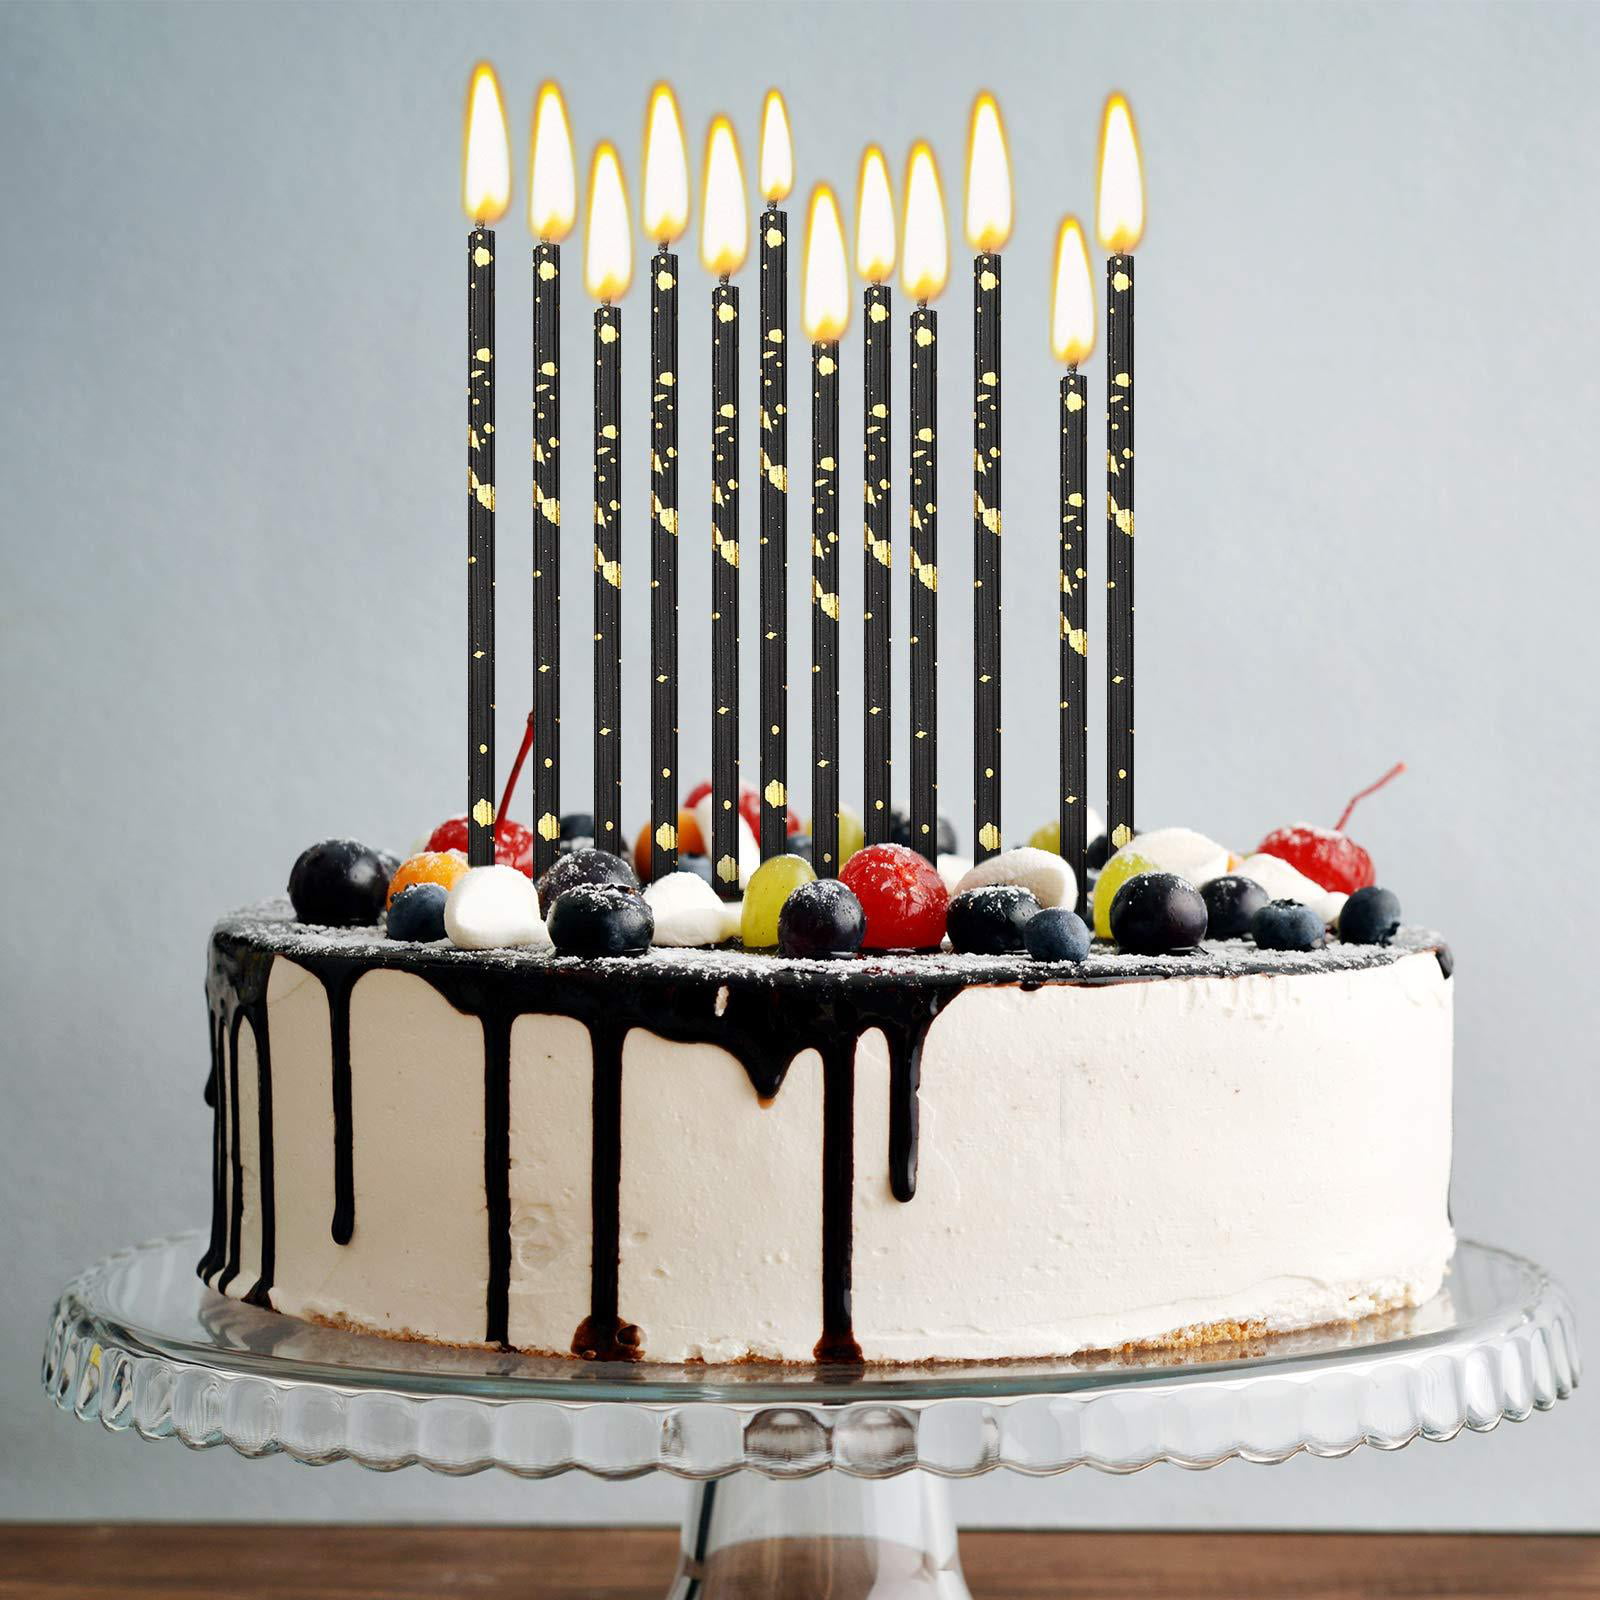 PARTVON Black Gold Birthday Cake Candles